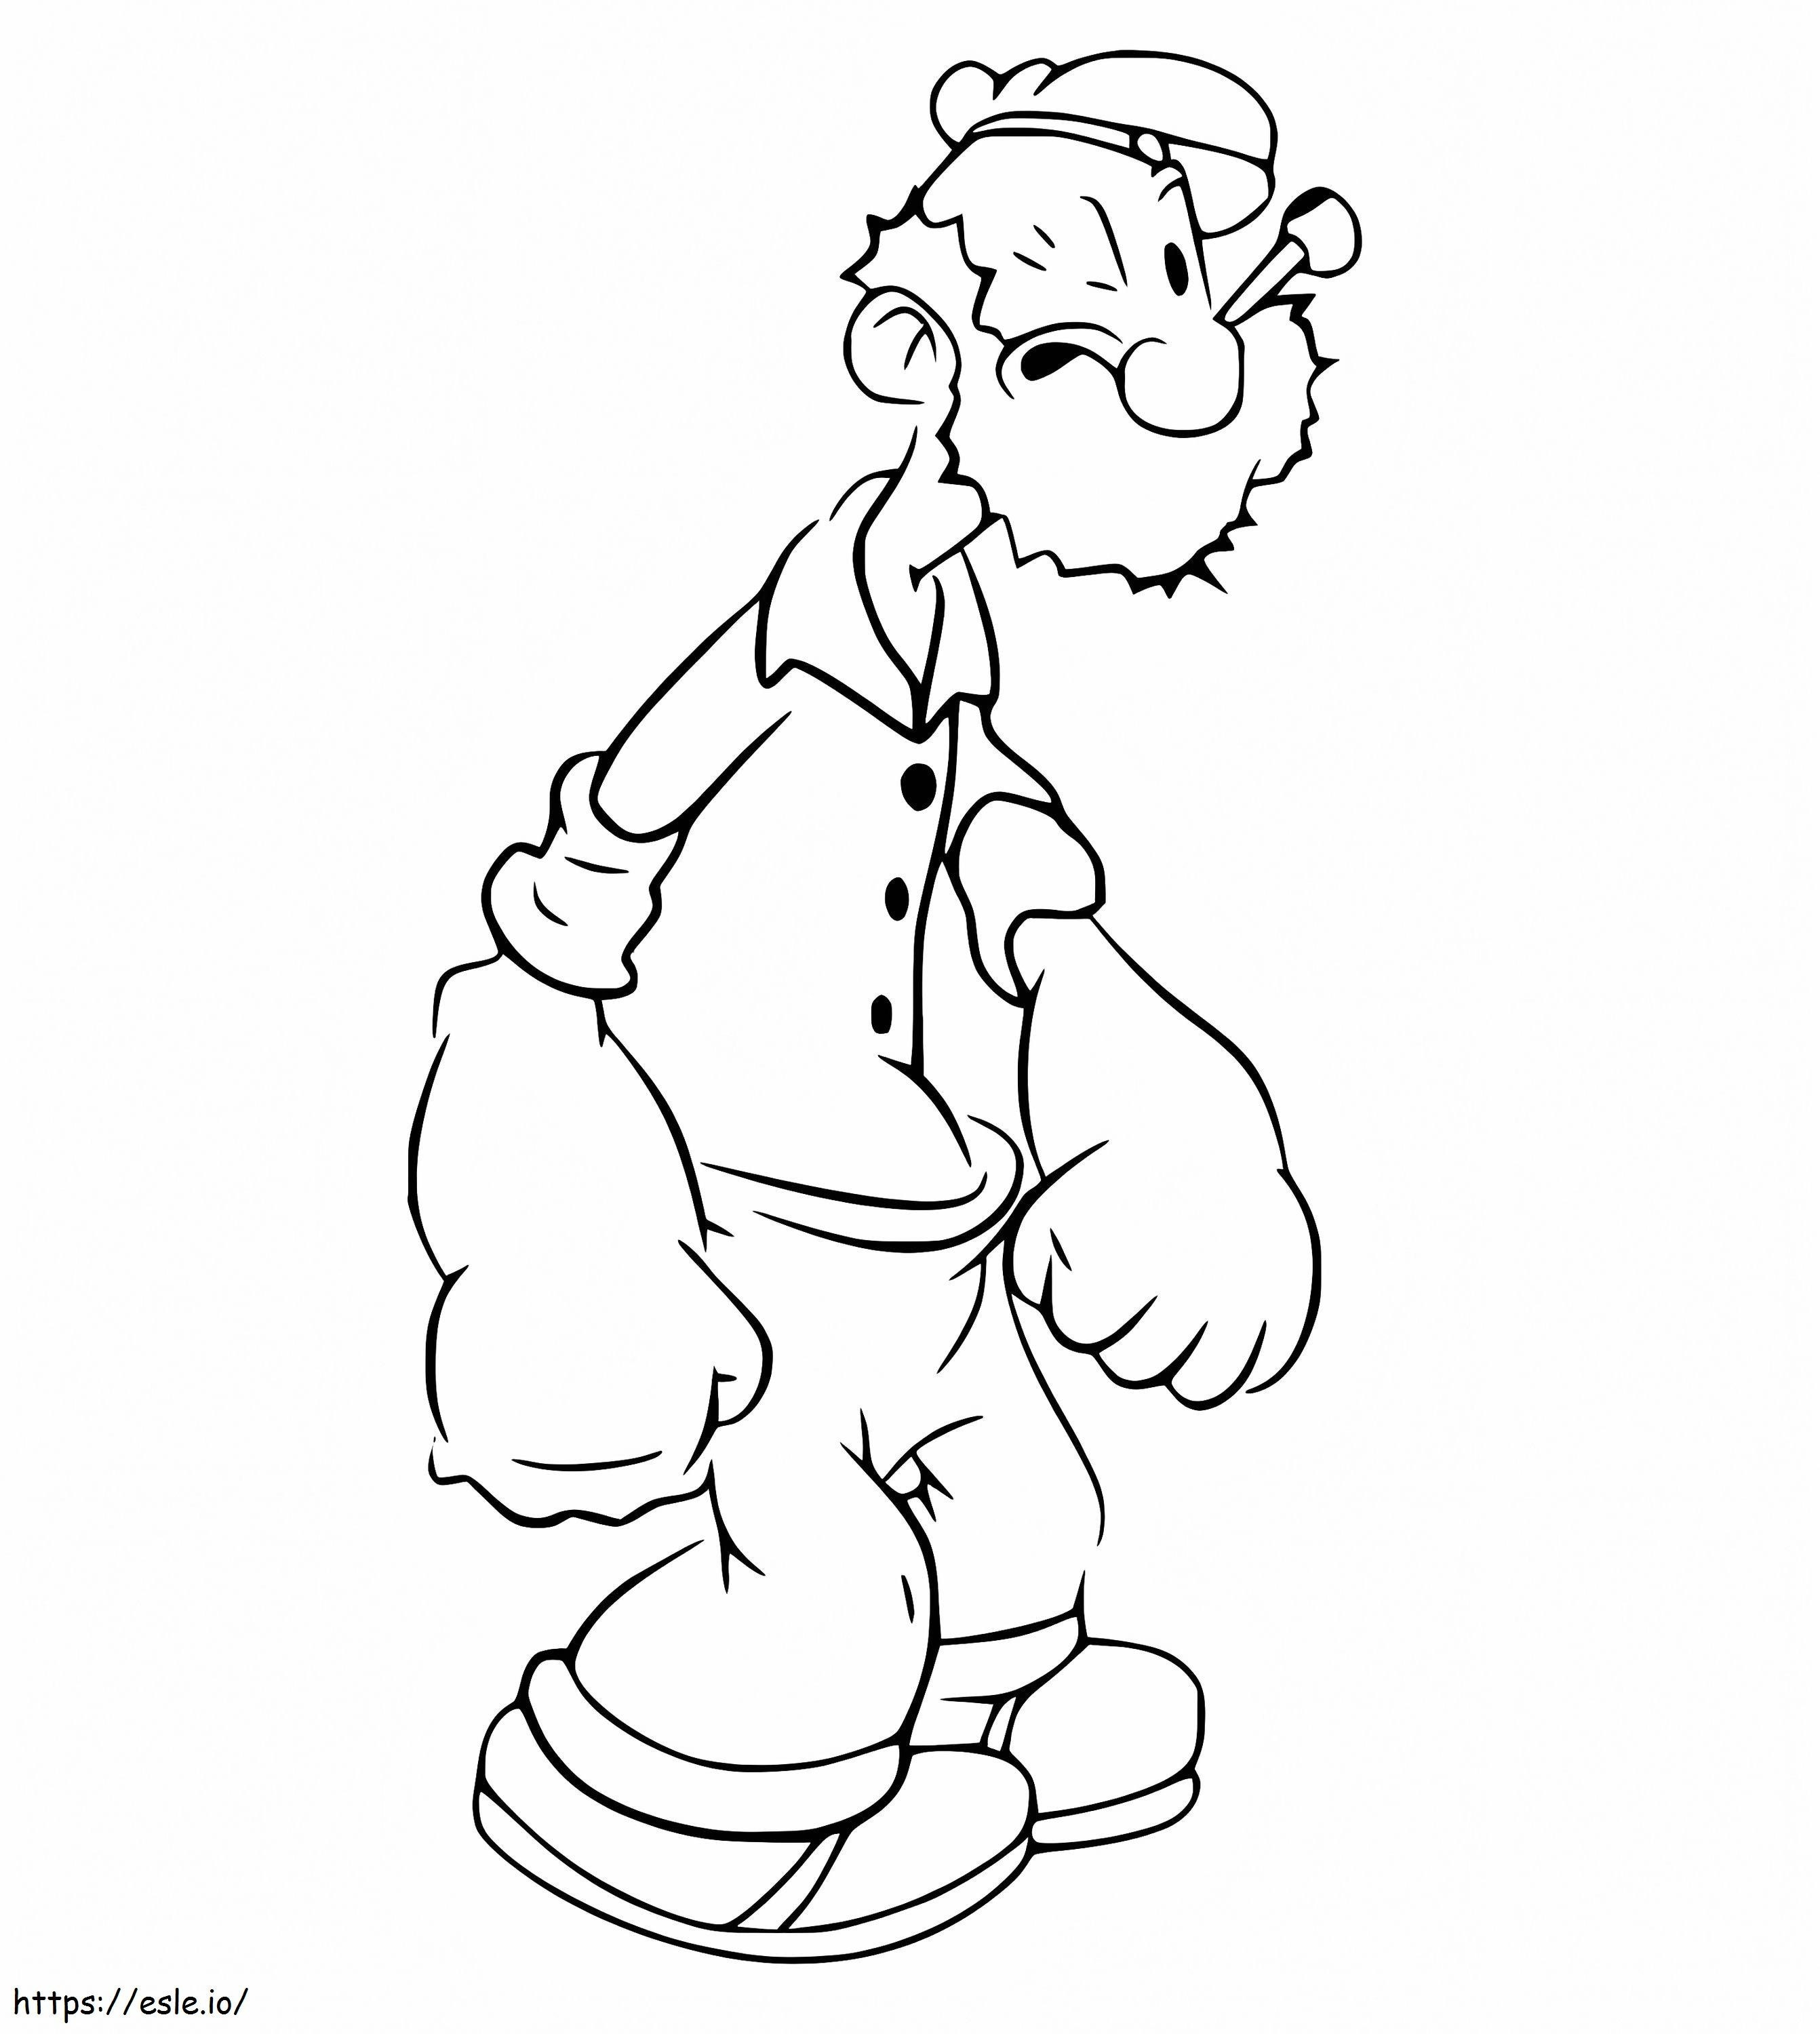 Velho Popeye para colorir